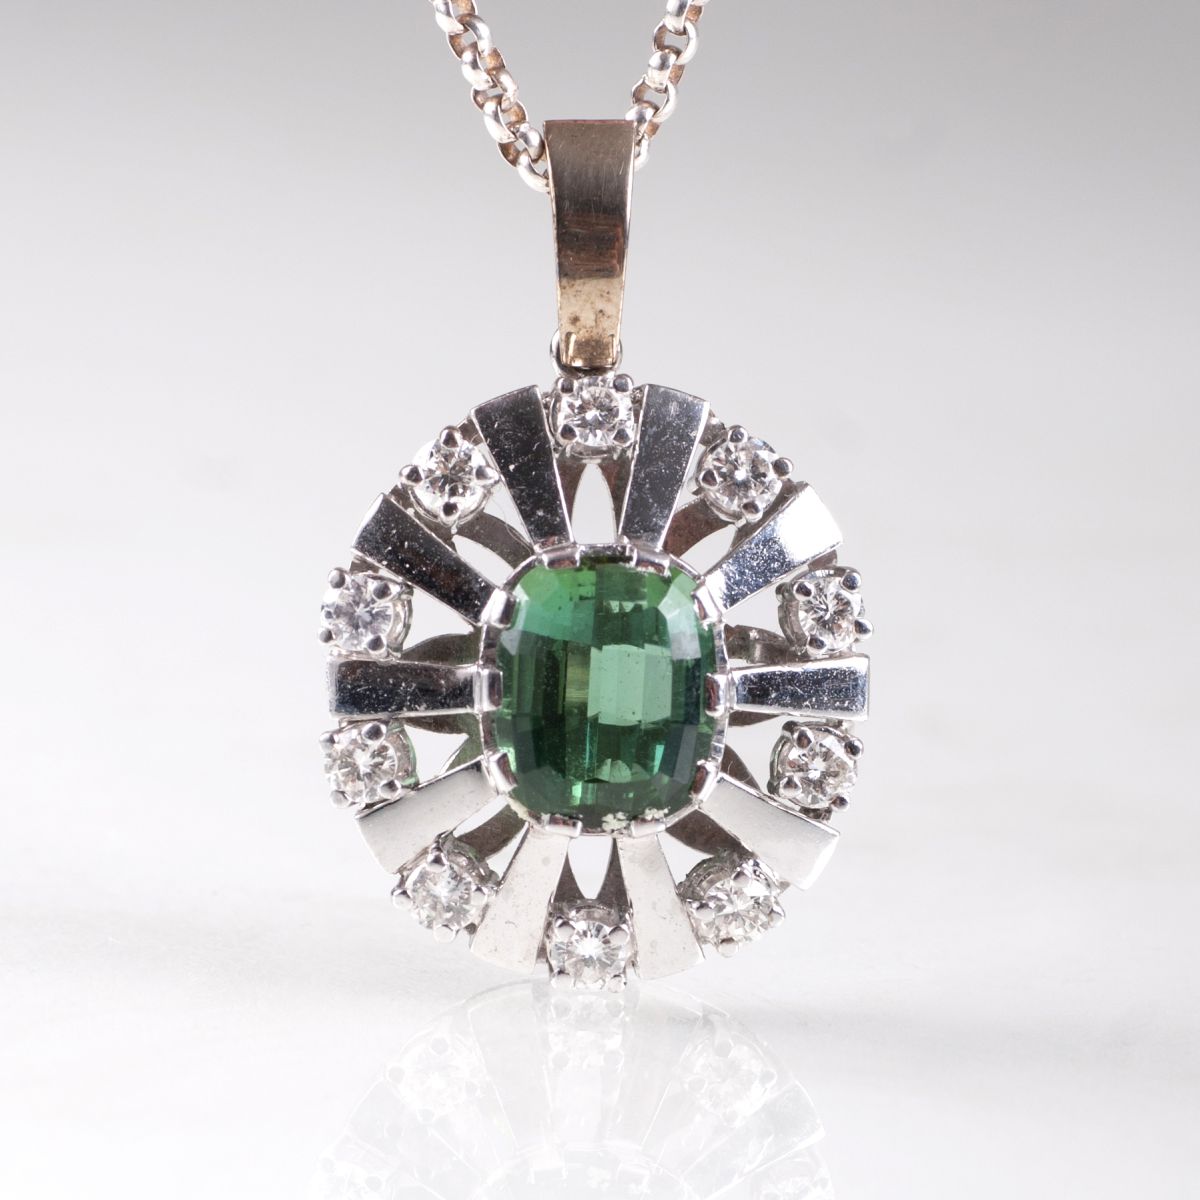 A tourmaline diamond pendant with necklace